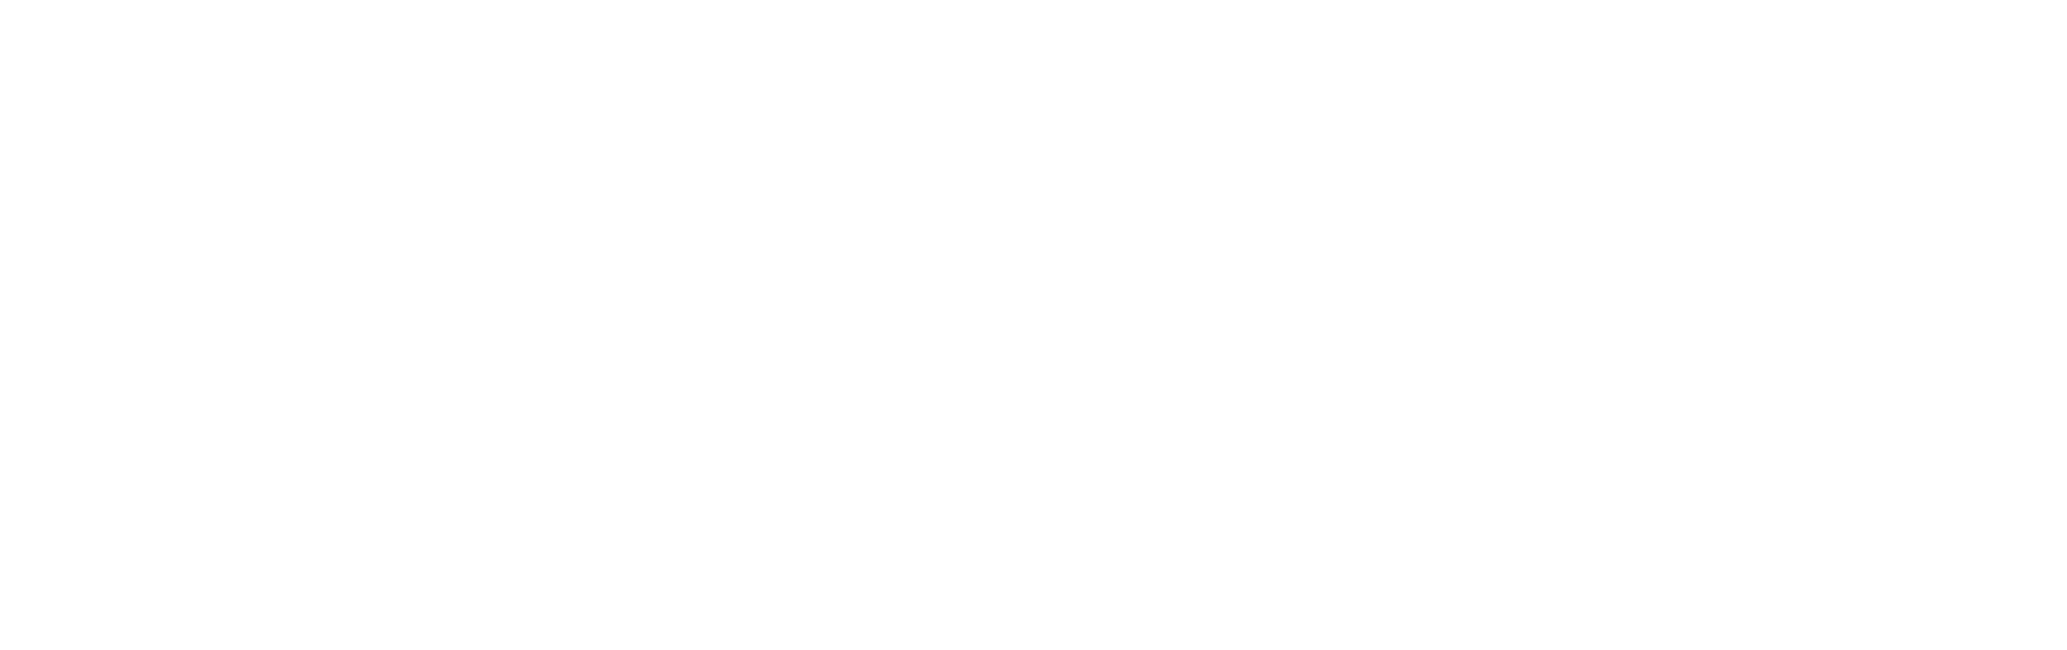 MISROMANIA Logo